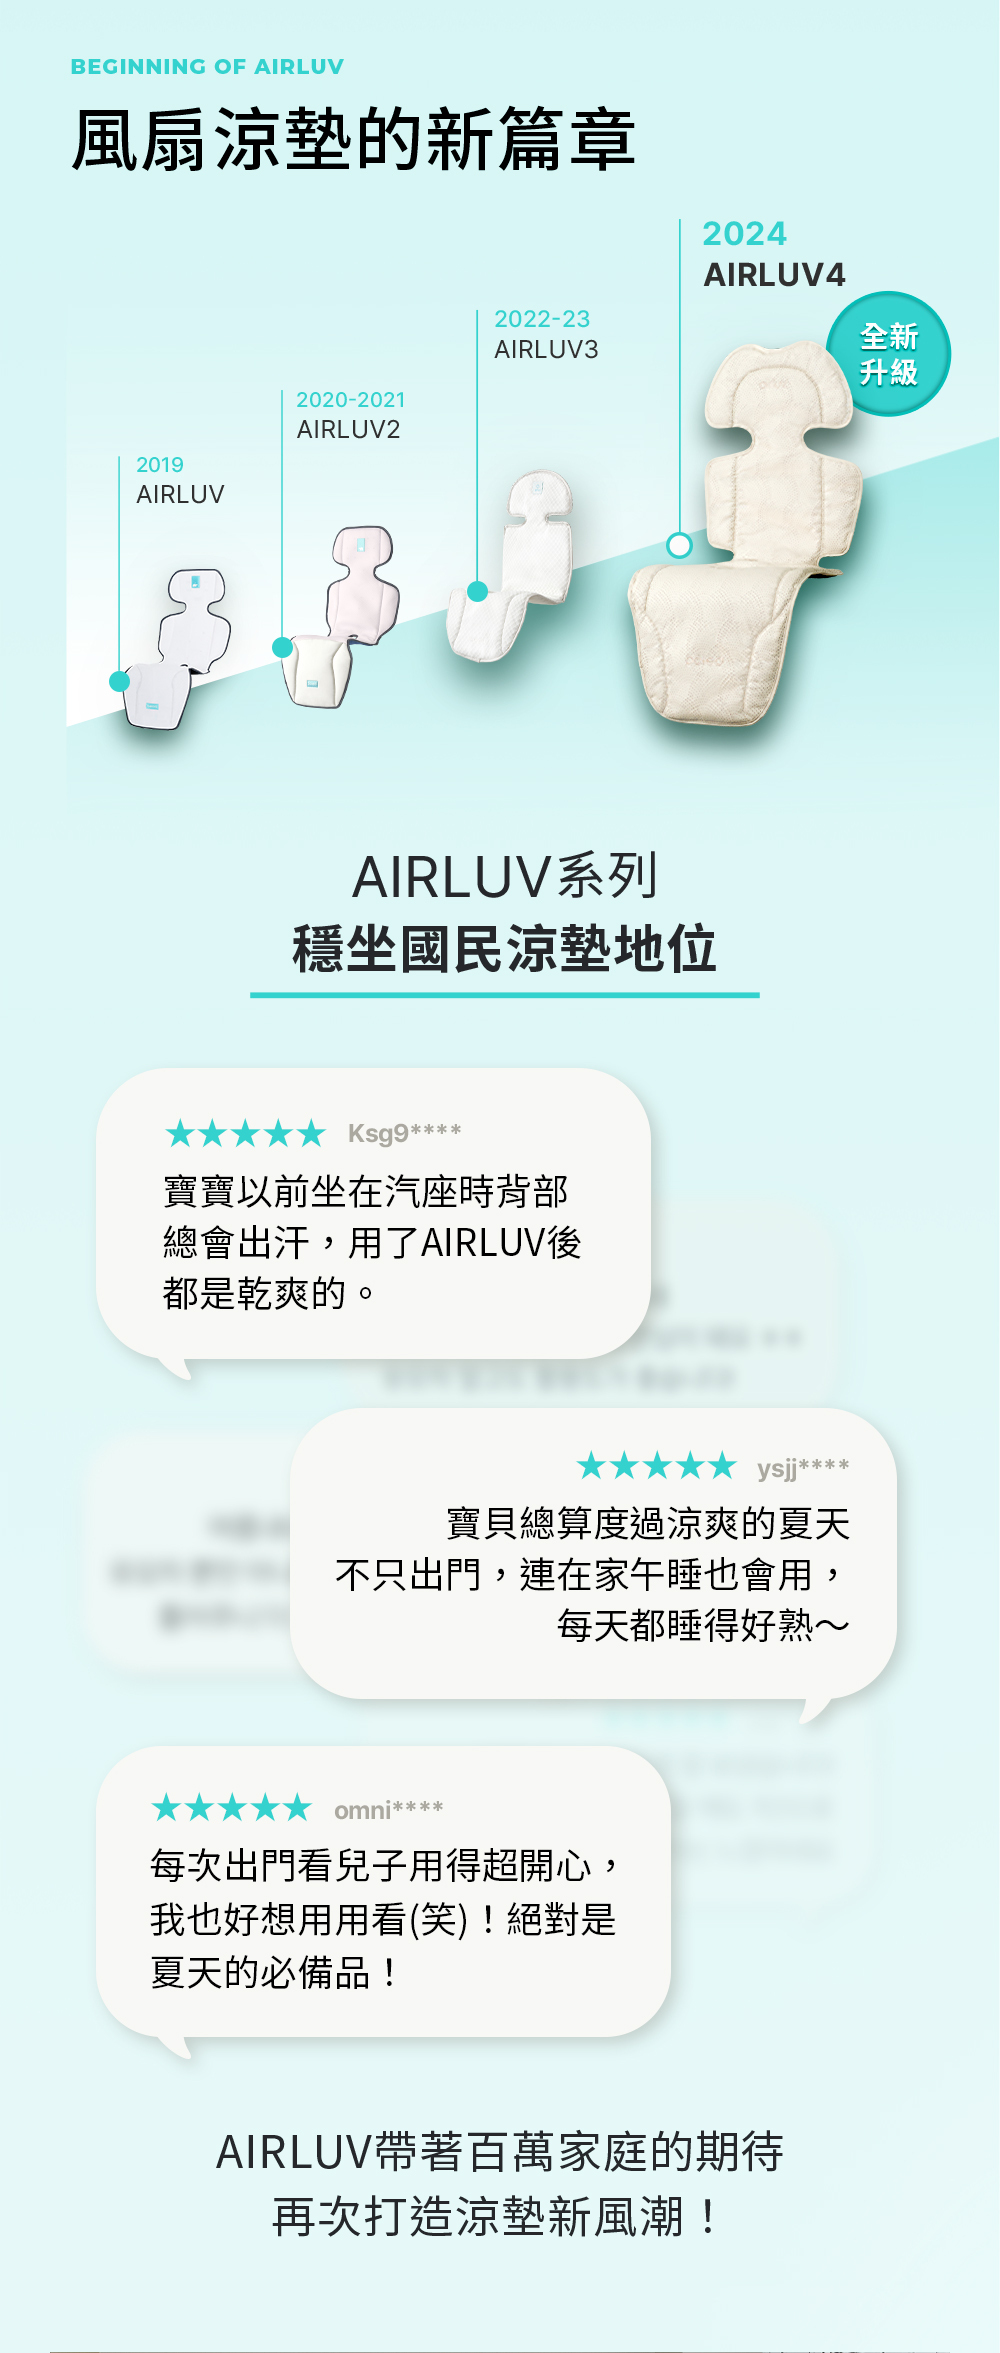 AIRLUV4風扇涼坐墊 全新冰鑽科技 微笑柔軟觸肌感